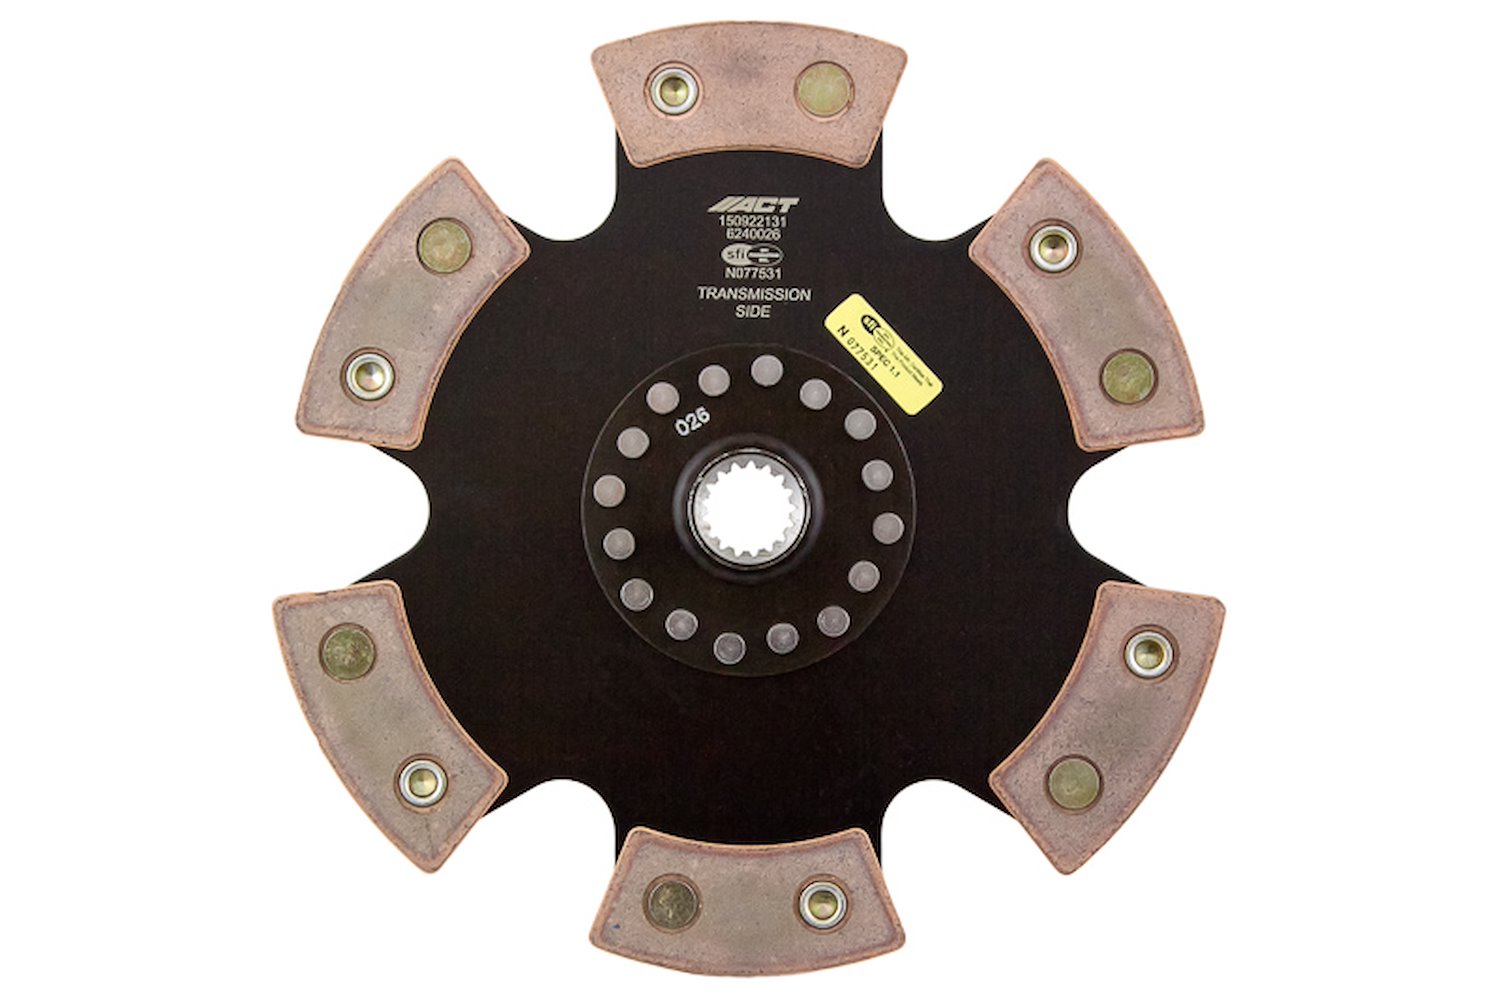 6-Pad Rigid Race Disc Transmission Clutch Friction Plate Fits Select Mopar